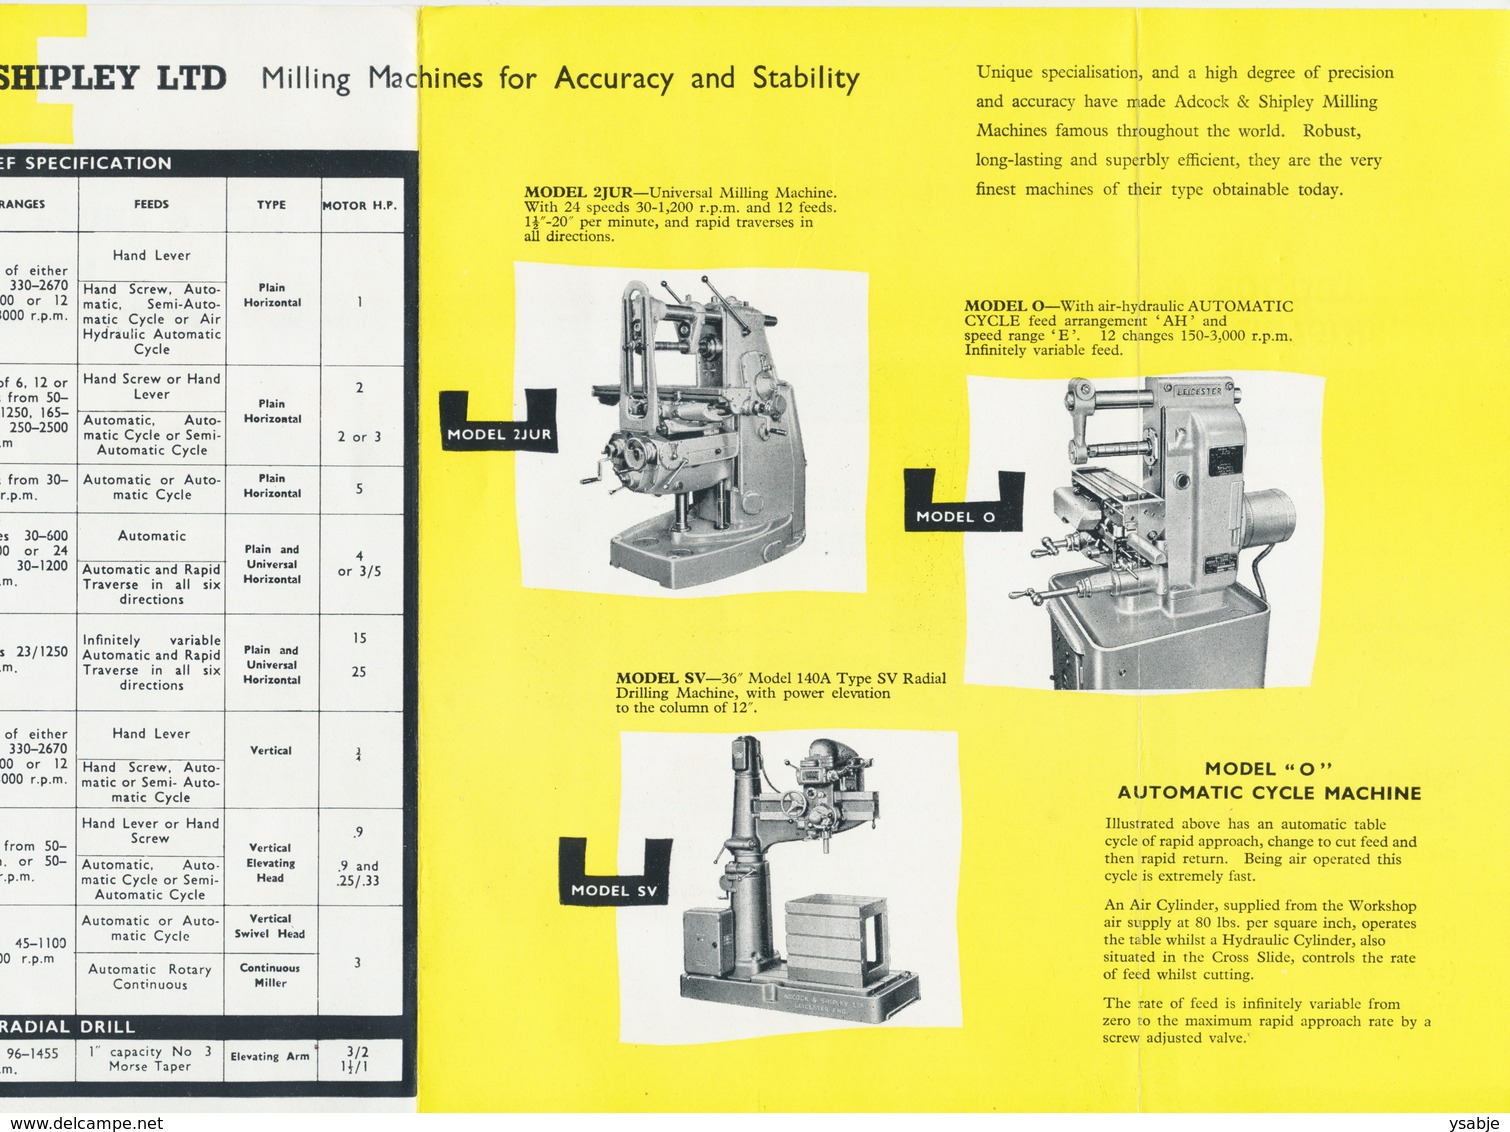 Adcock & Shipley Ltd - Milling Machines - Reclamefolder - Altri Apparecchi